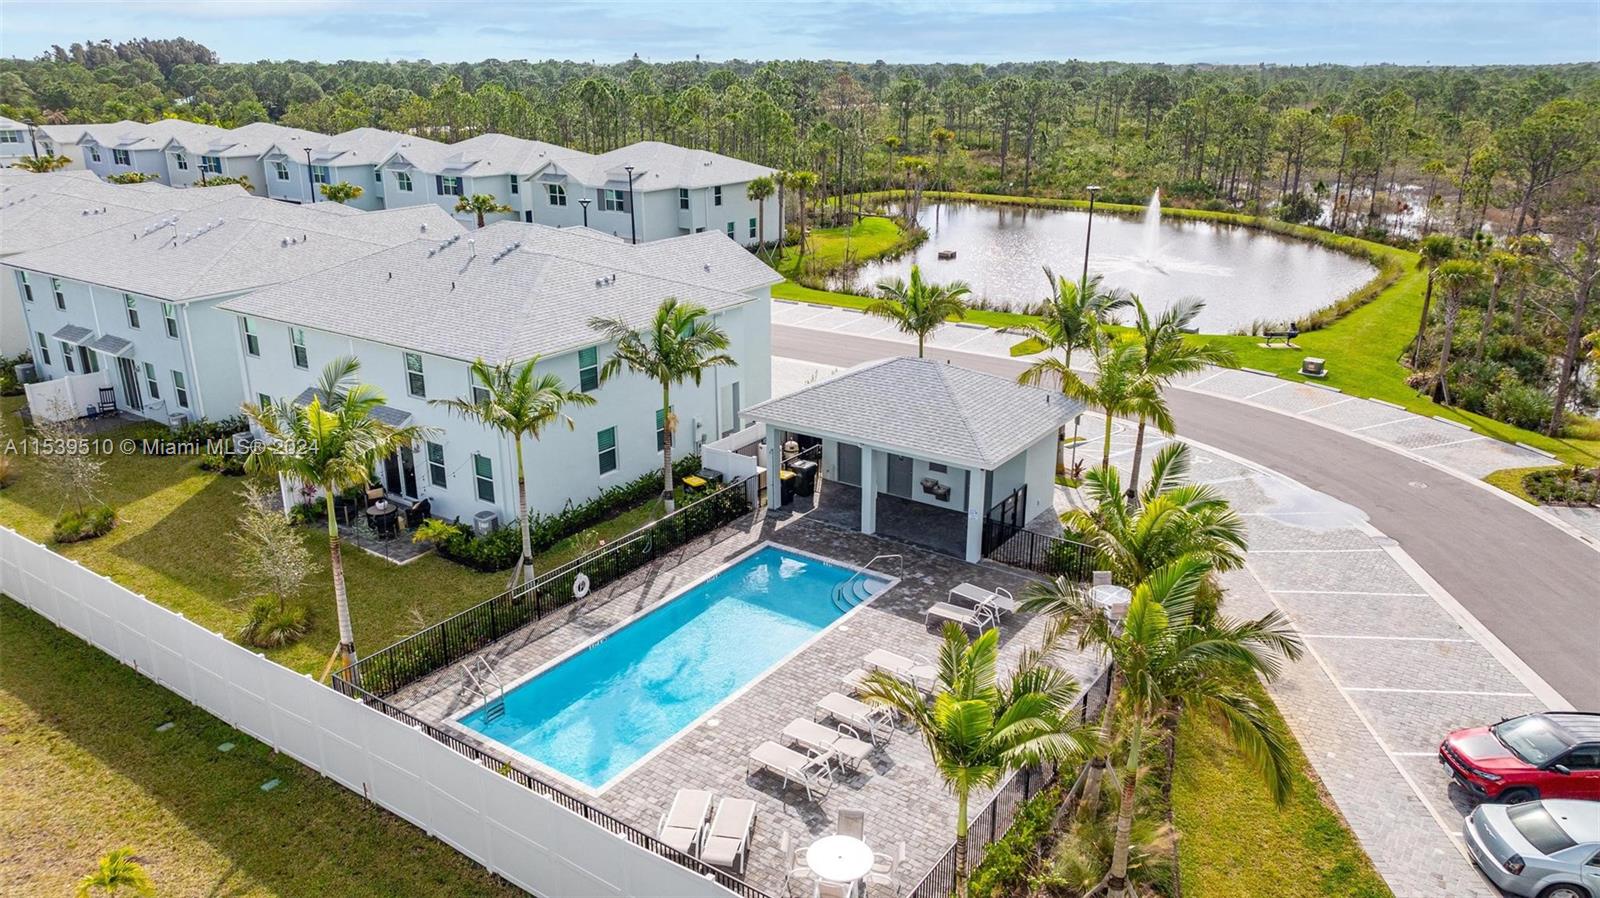 Rental Property at 265 Osprey Preserve Blvd 265, Jensen Beach, Martin County, Florida - Bedrooms: 3 
Bathrooms: 3  - $2,900 MO.